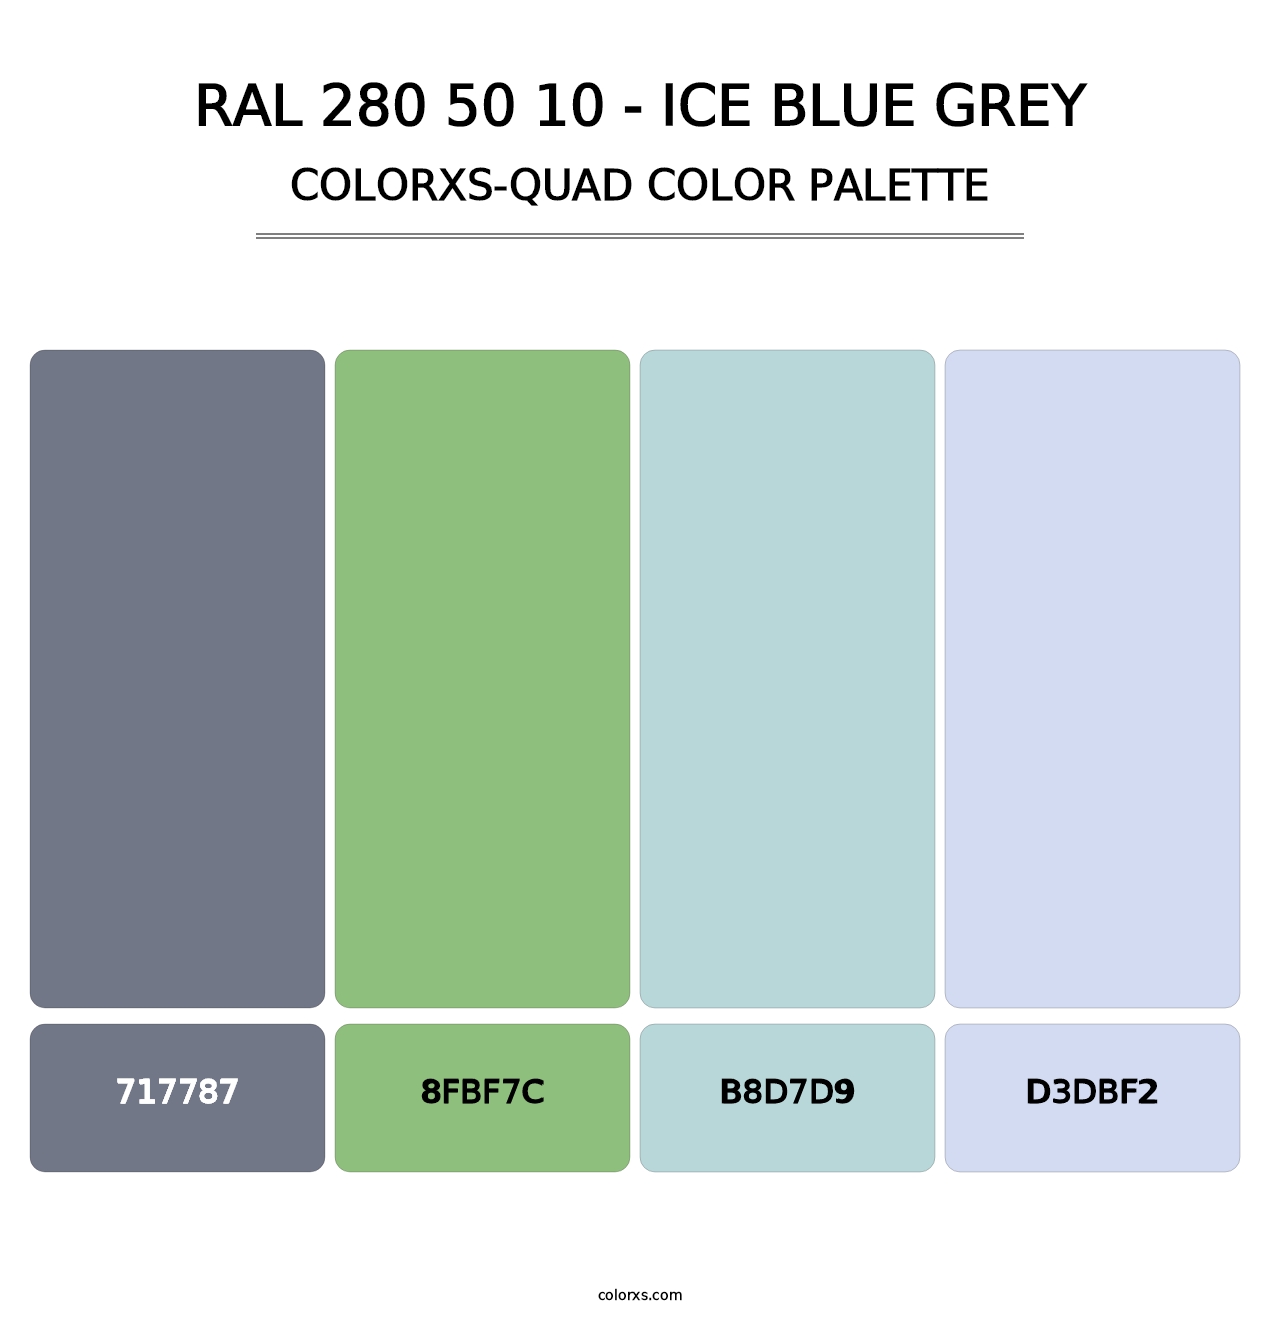 RAL 280 50 10 - Ice Blue Grey - Colorxs Quad Palette